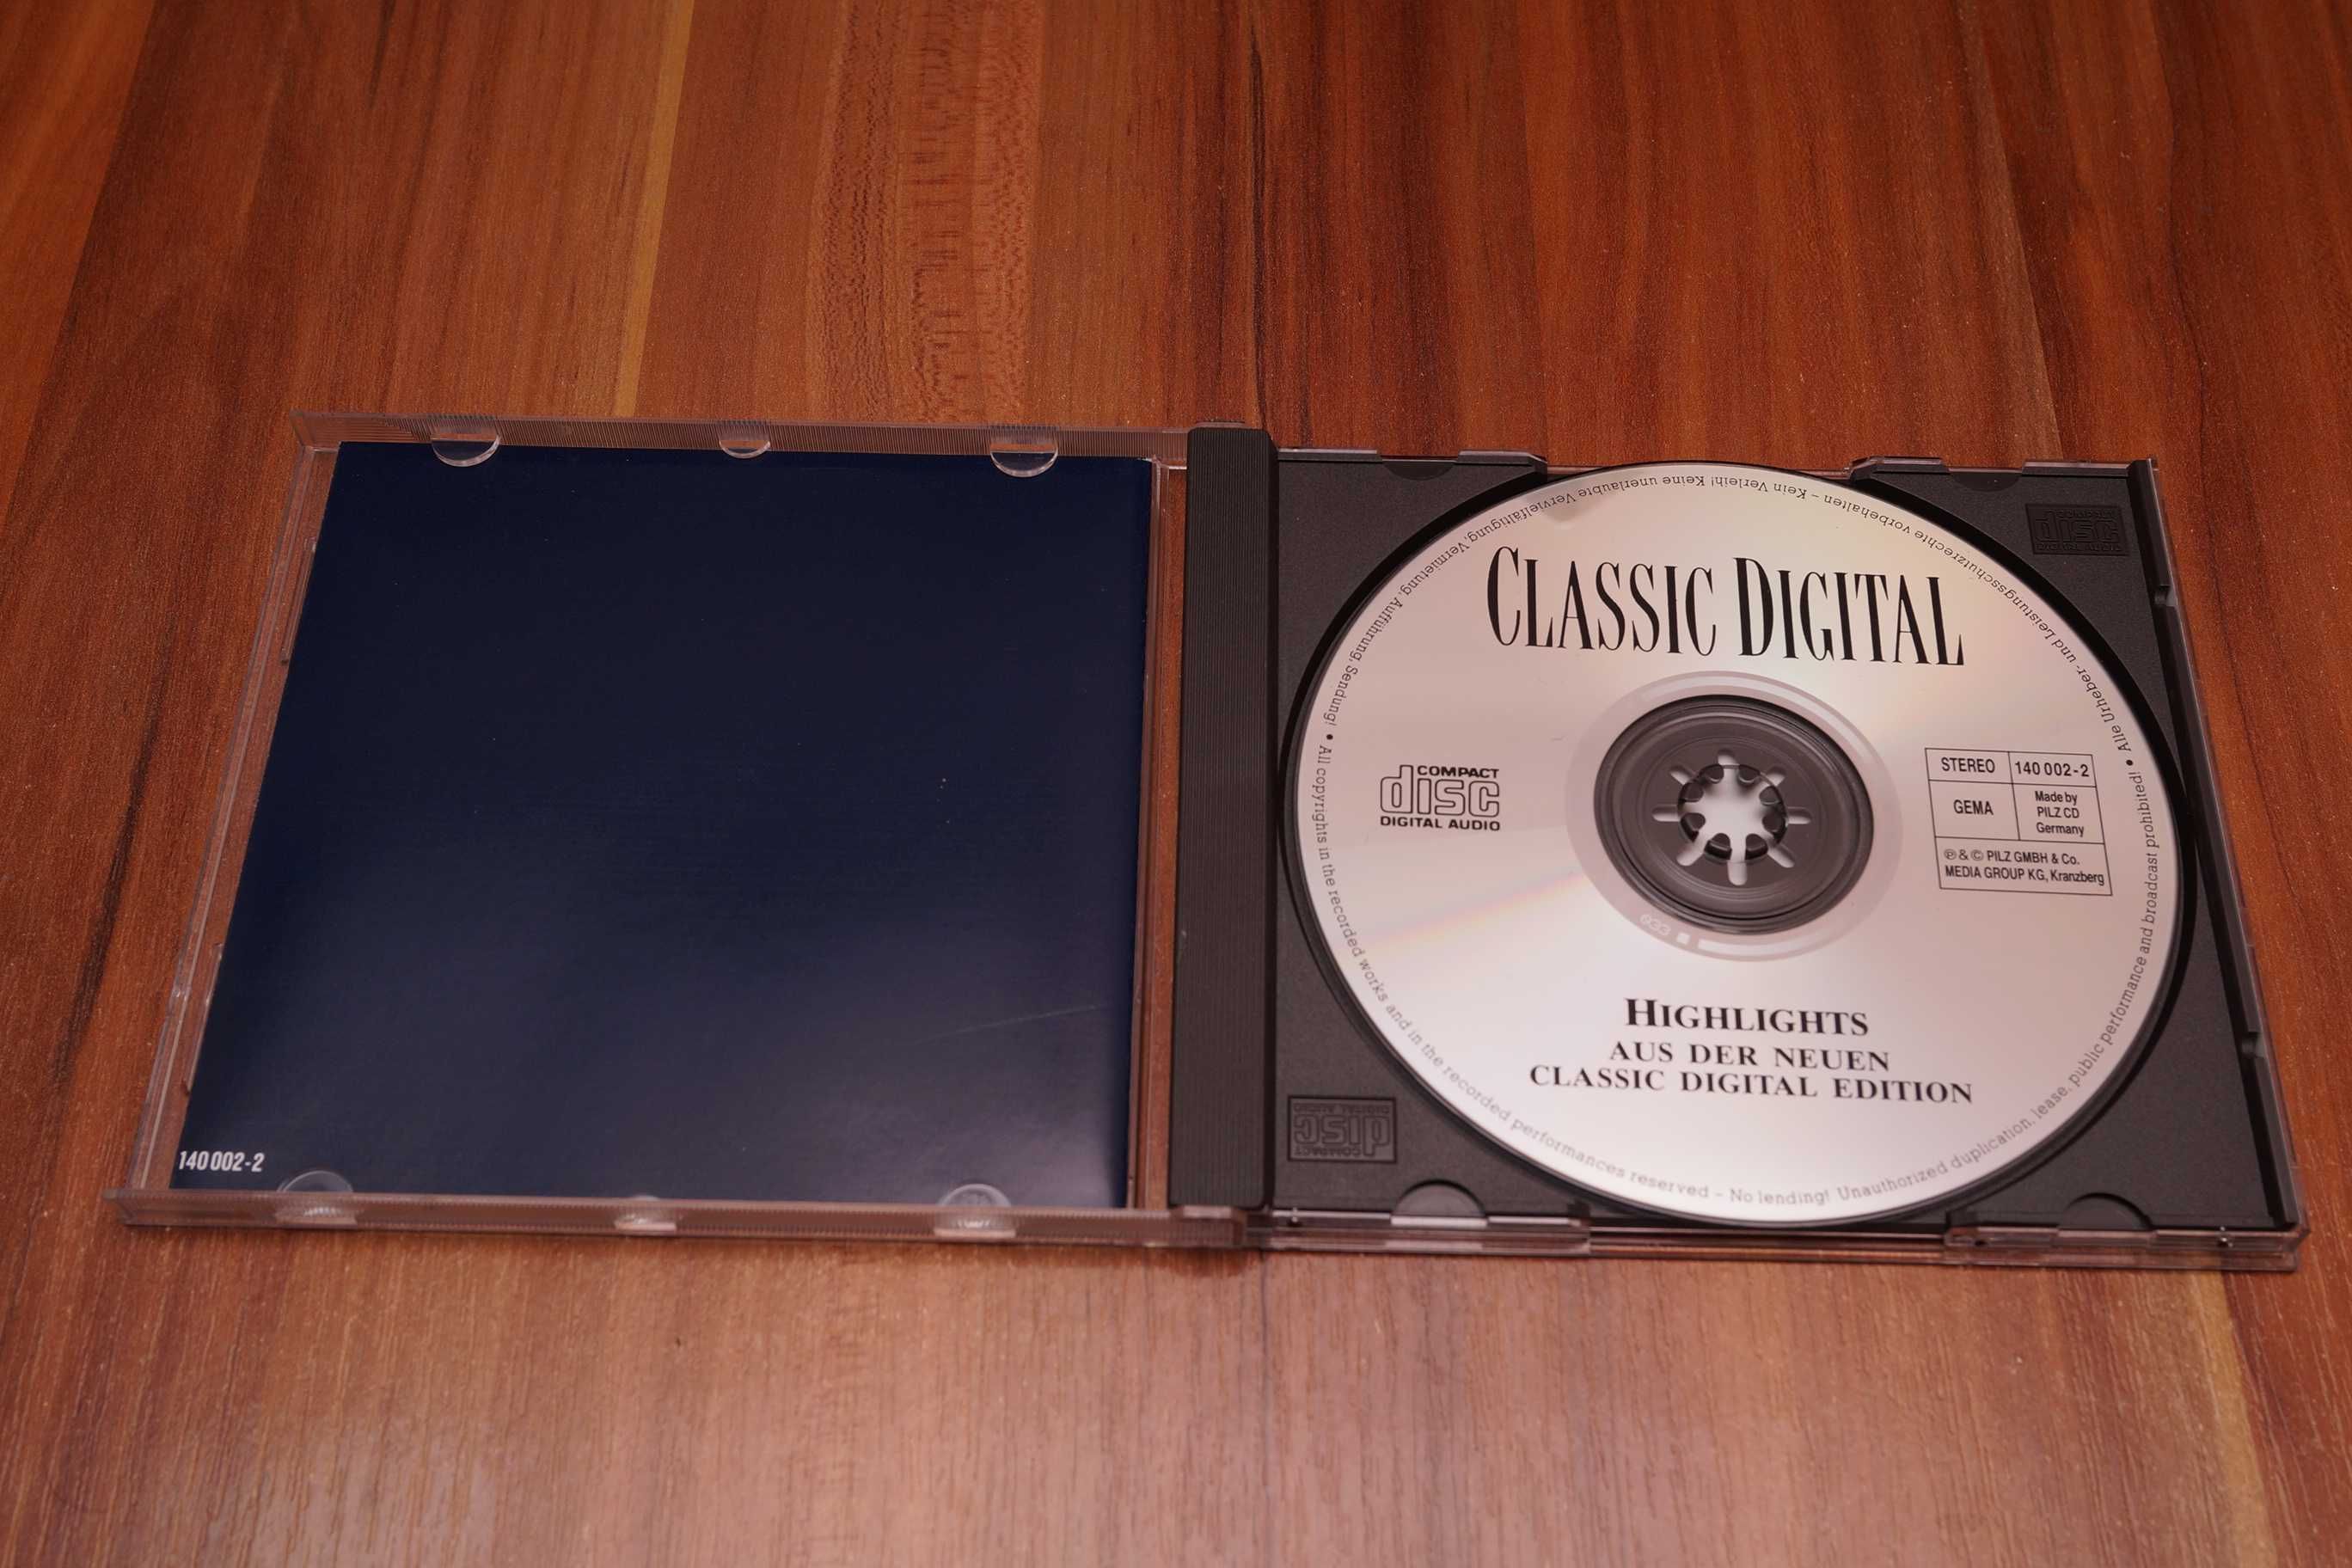 Classic Digital Highlights Aus Der Neuen Classic Digital Edition CD